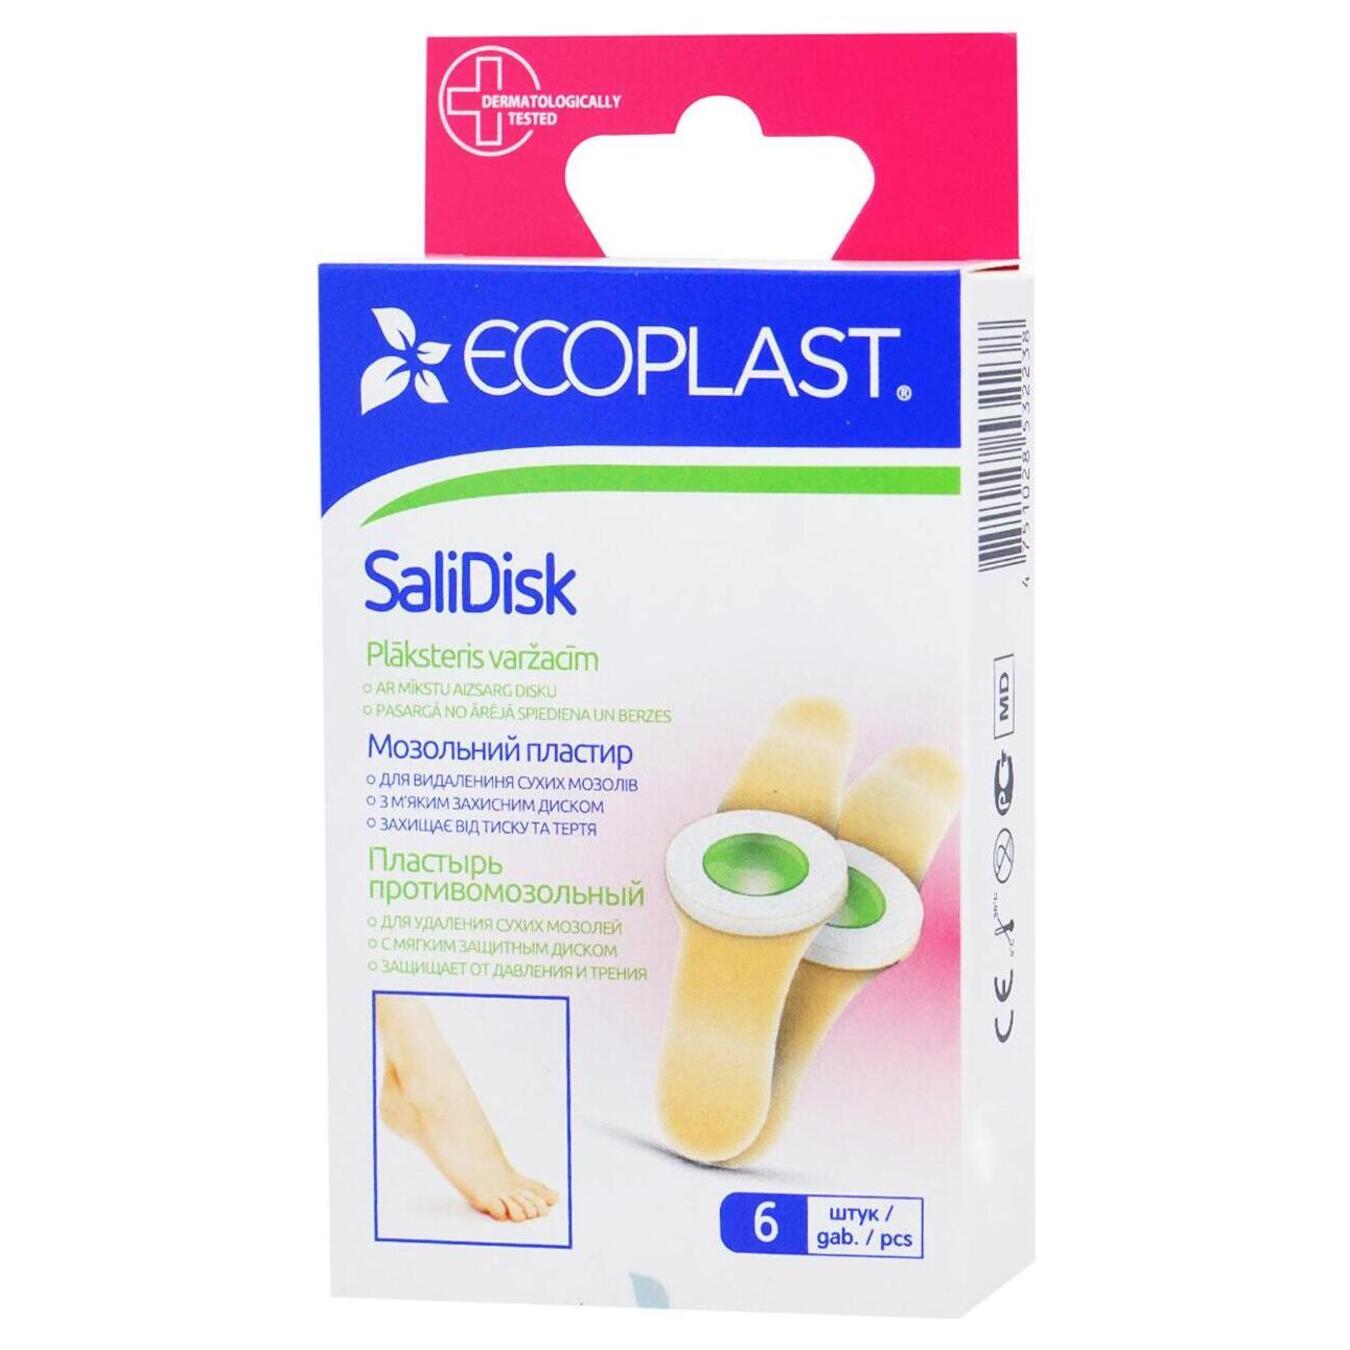 Callus patch Ecoplast SaliDisk for removing calluses 6 pcs